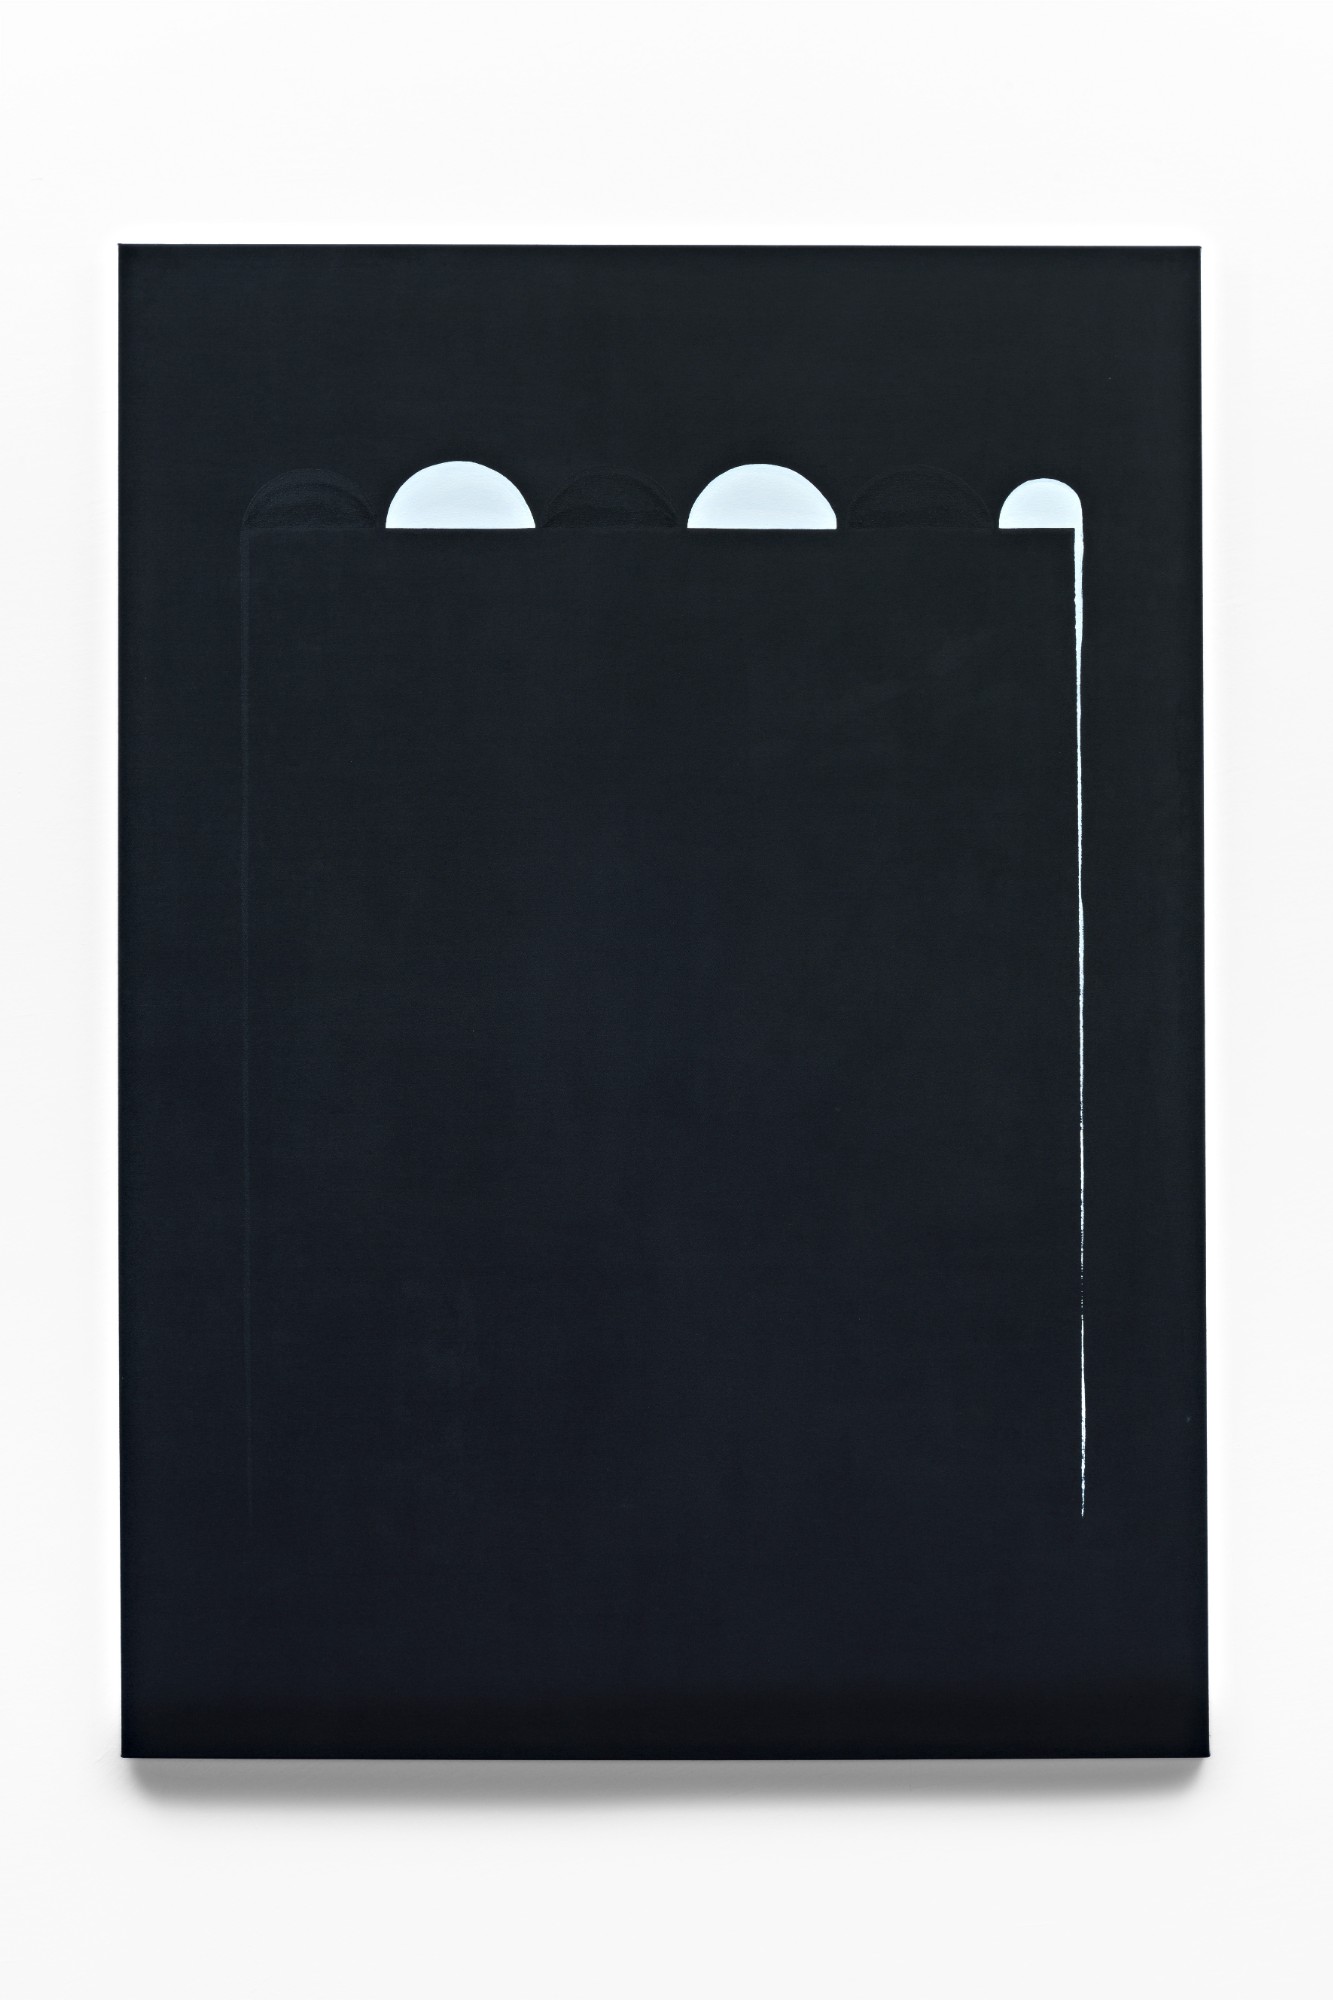 Holger Endres, Miami Beach (black), 2017, acrylic on cotton, 140 x 100 cm